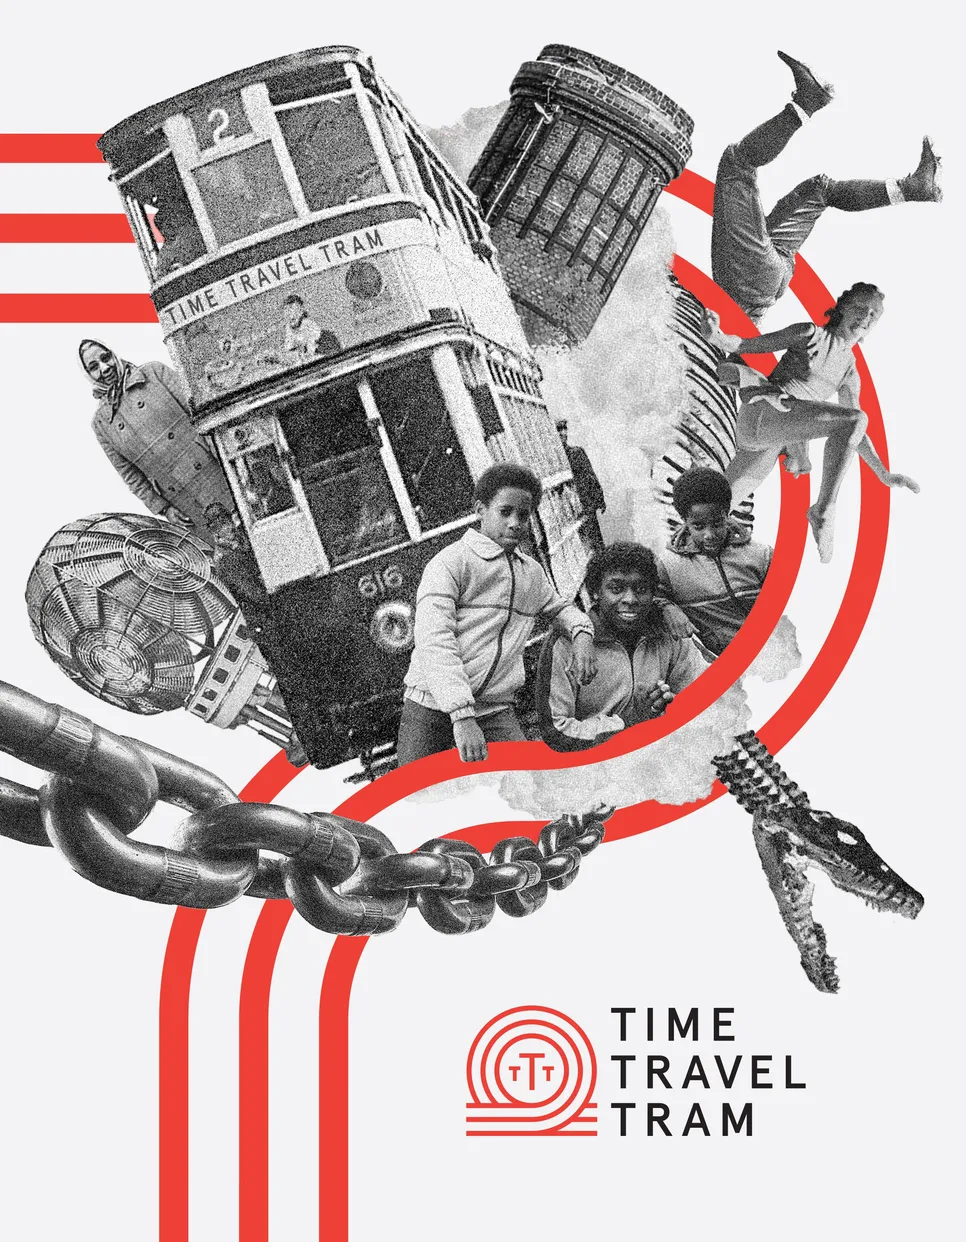 Time travel tram visual